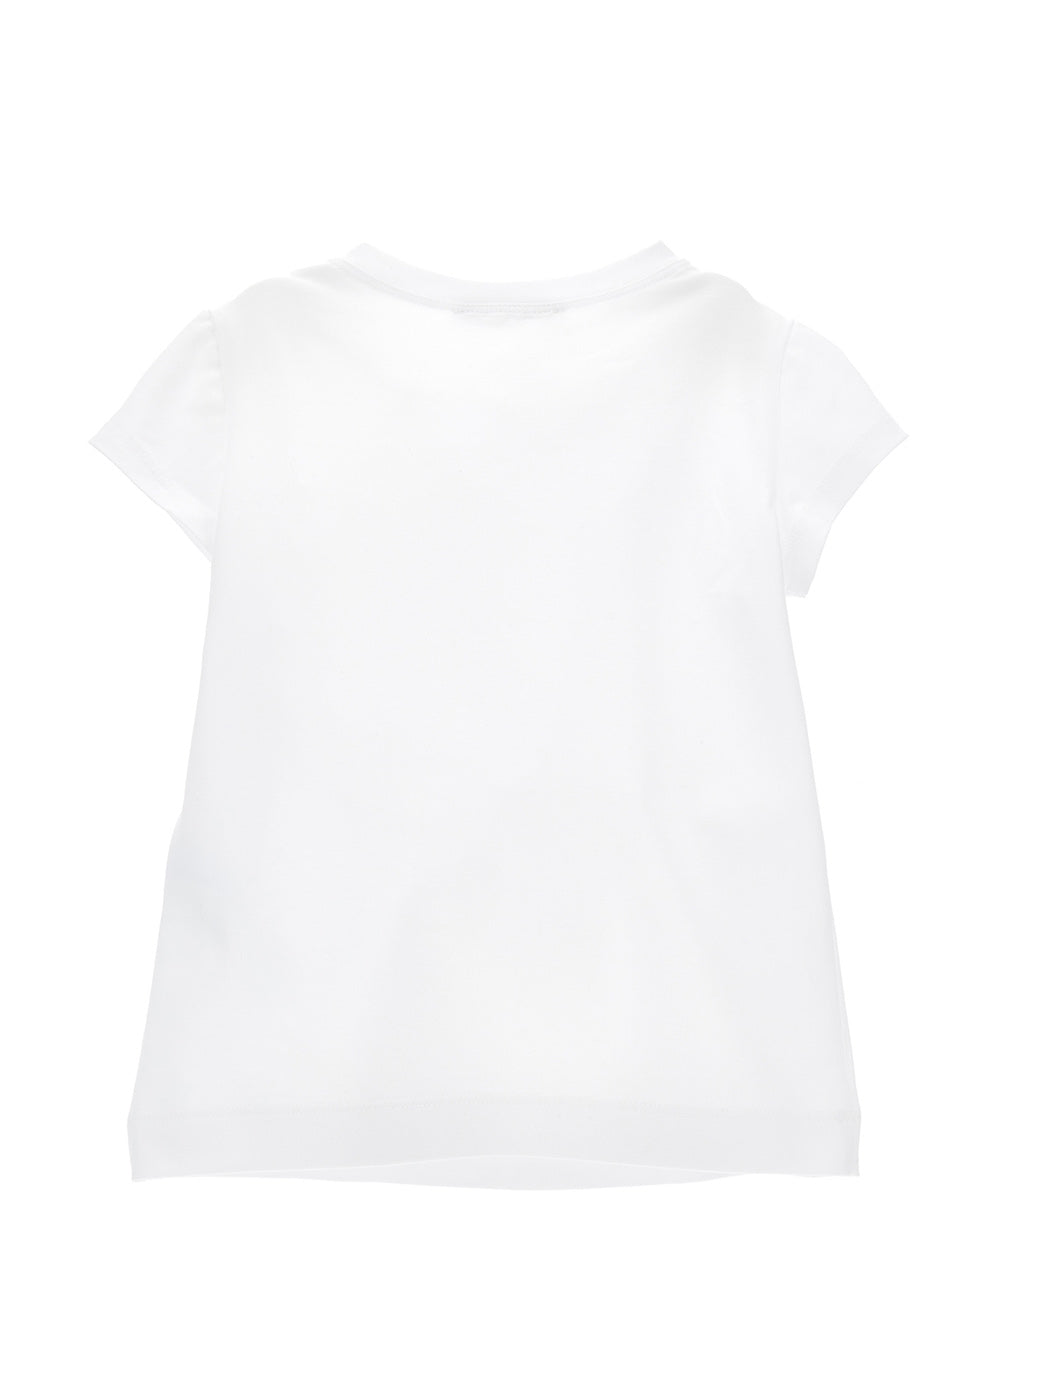 MONNALISA Cherry print cotton T-shirt-11A6081201